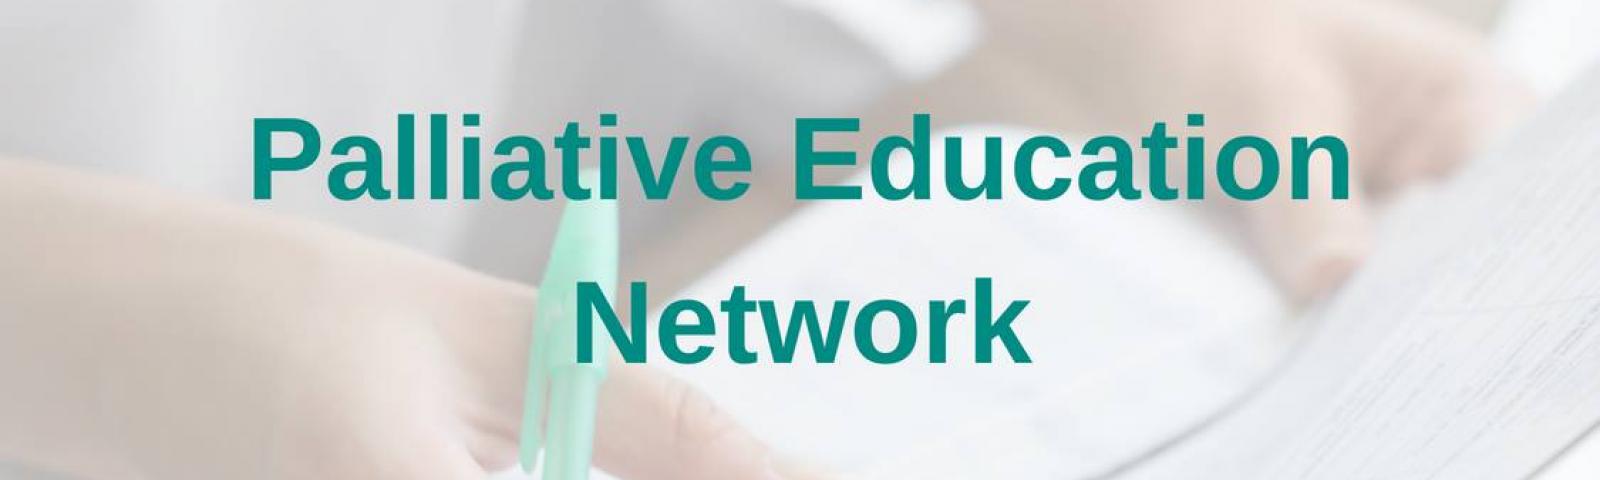 Palliative Education Network